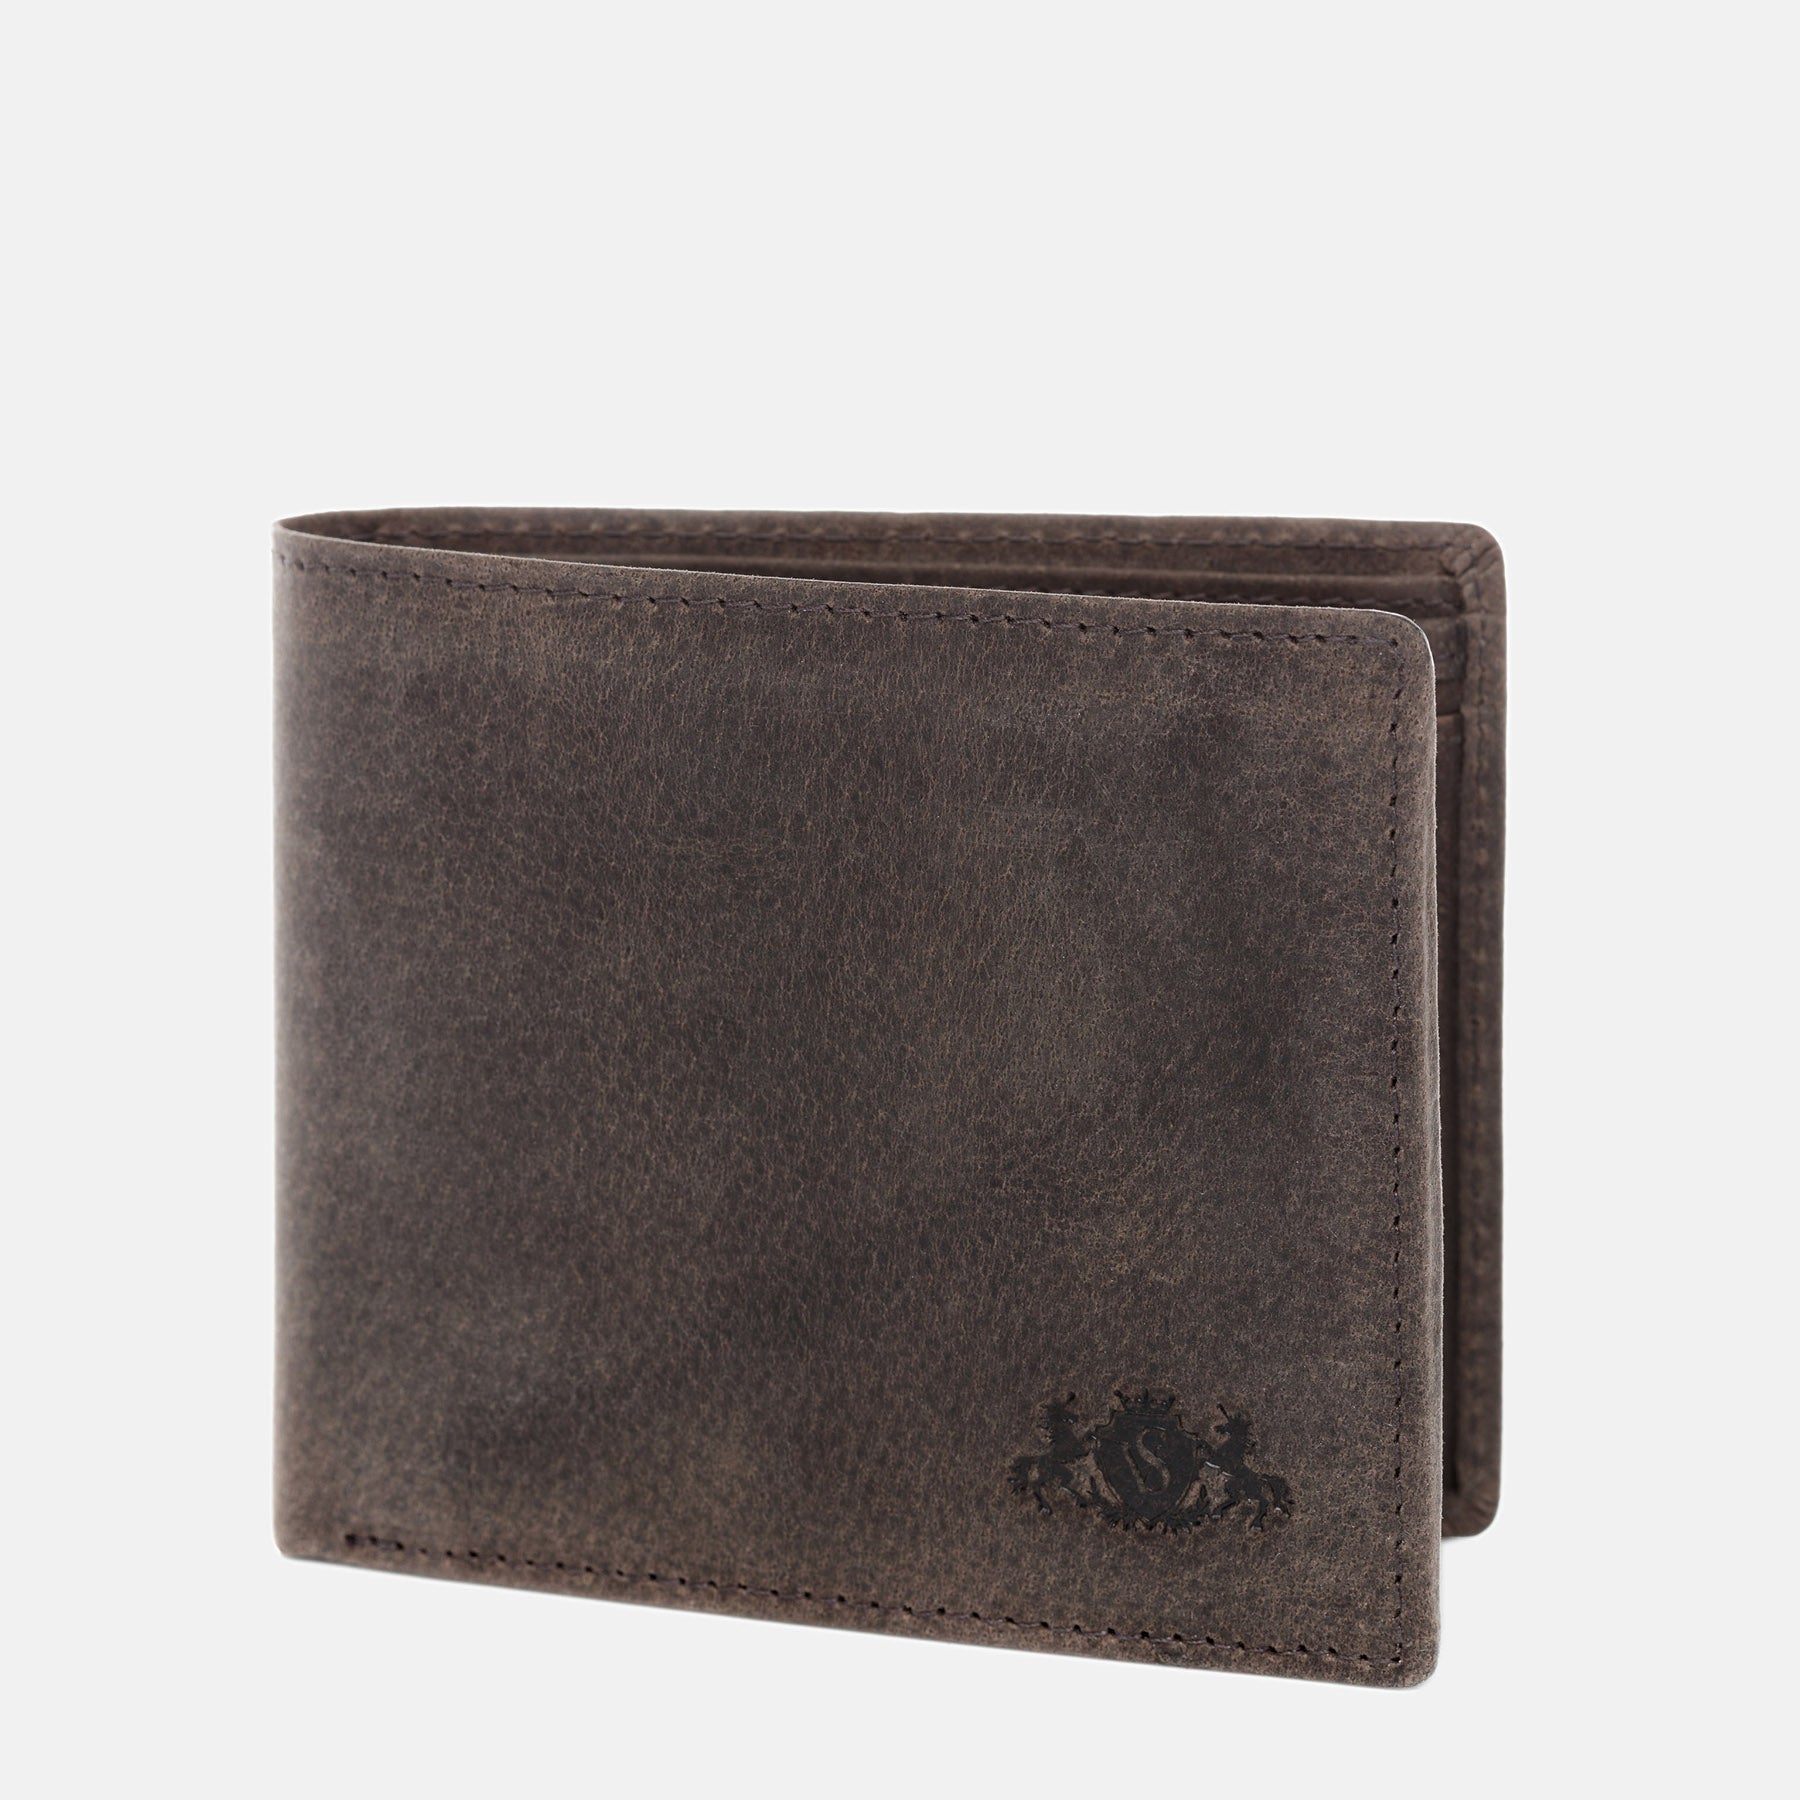 Wallet JACK buffalo leather brown